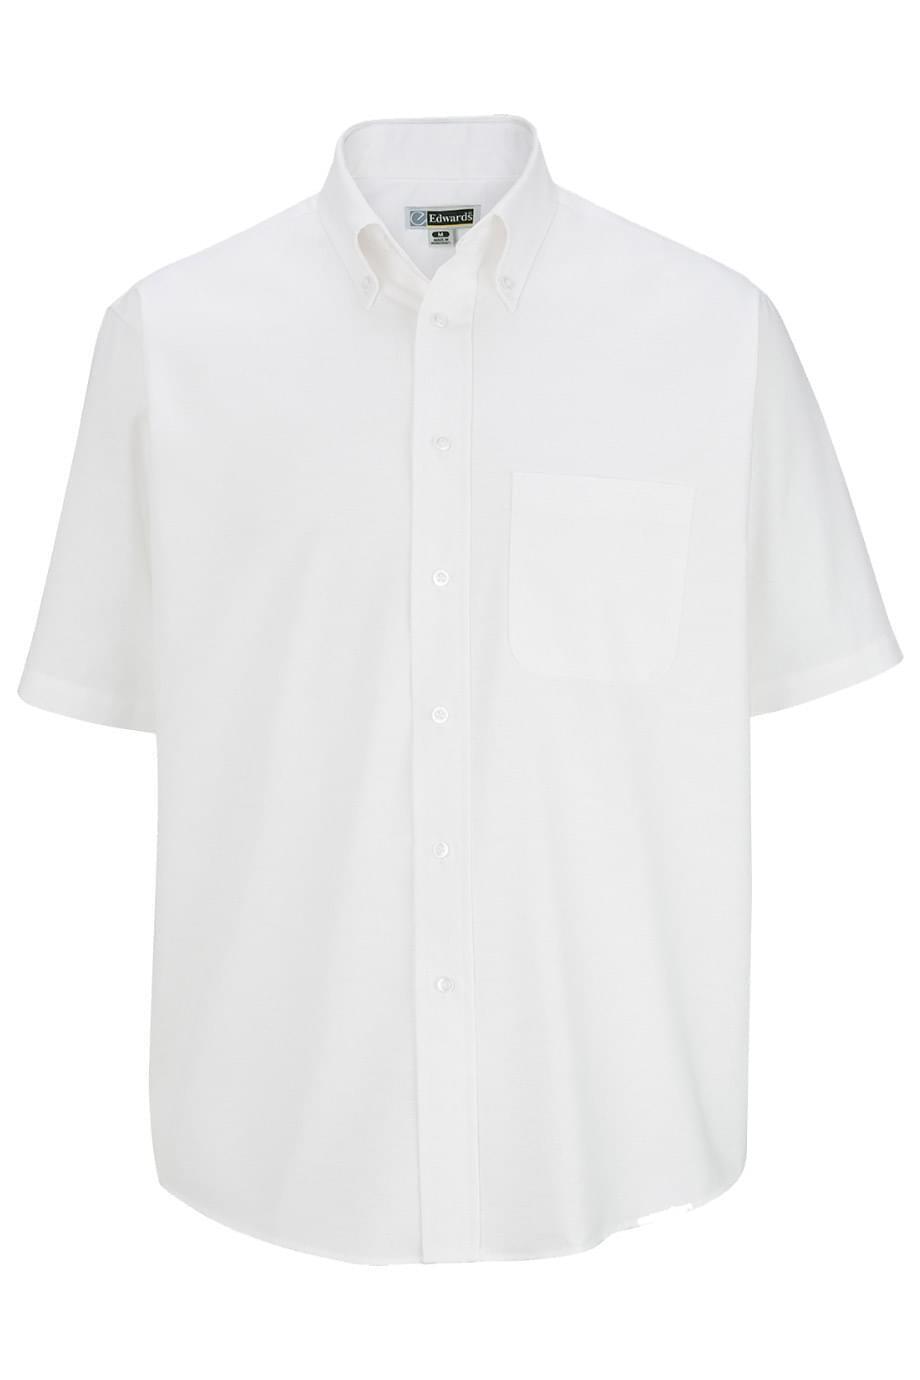 *NEW* Edwards Men's Short Sleeve Oxford Easy Care Uniform Work Shirt 1027